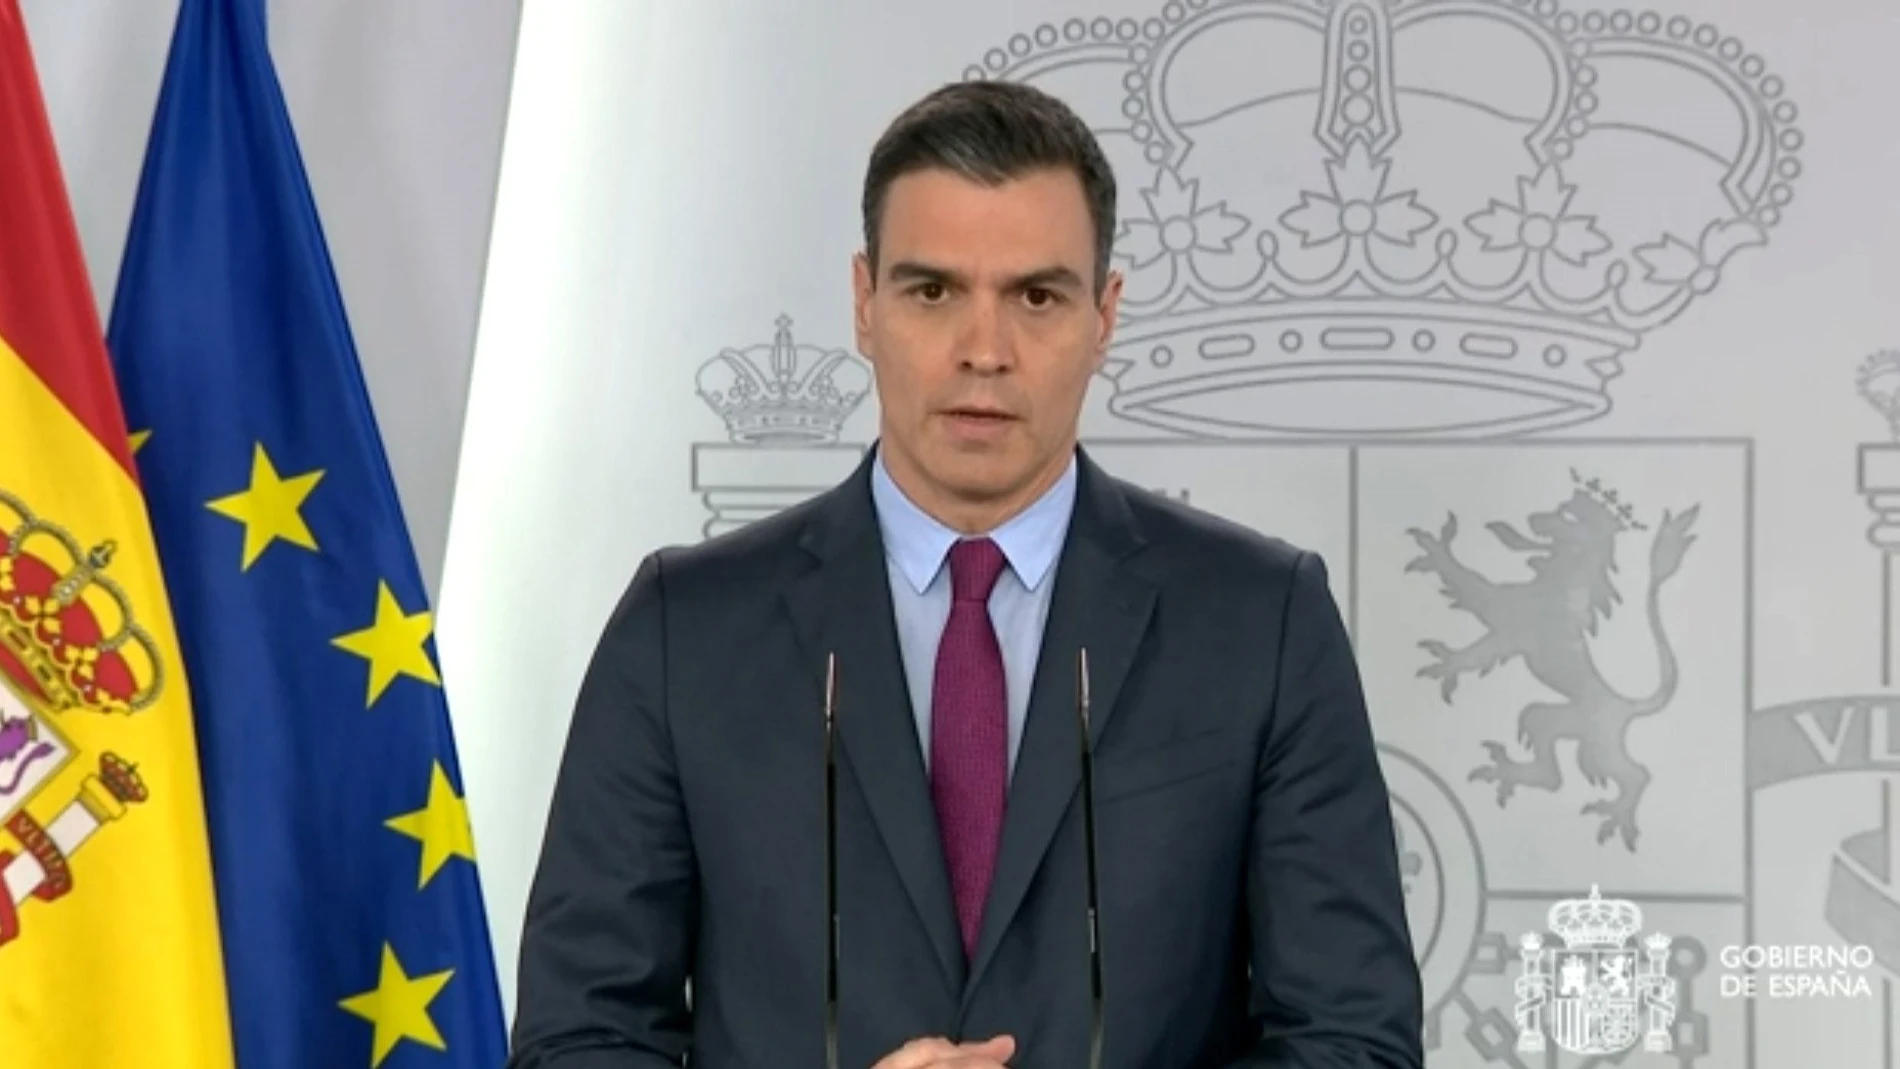 Prime Minister Pedro Sanchez press conference